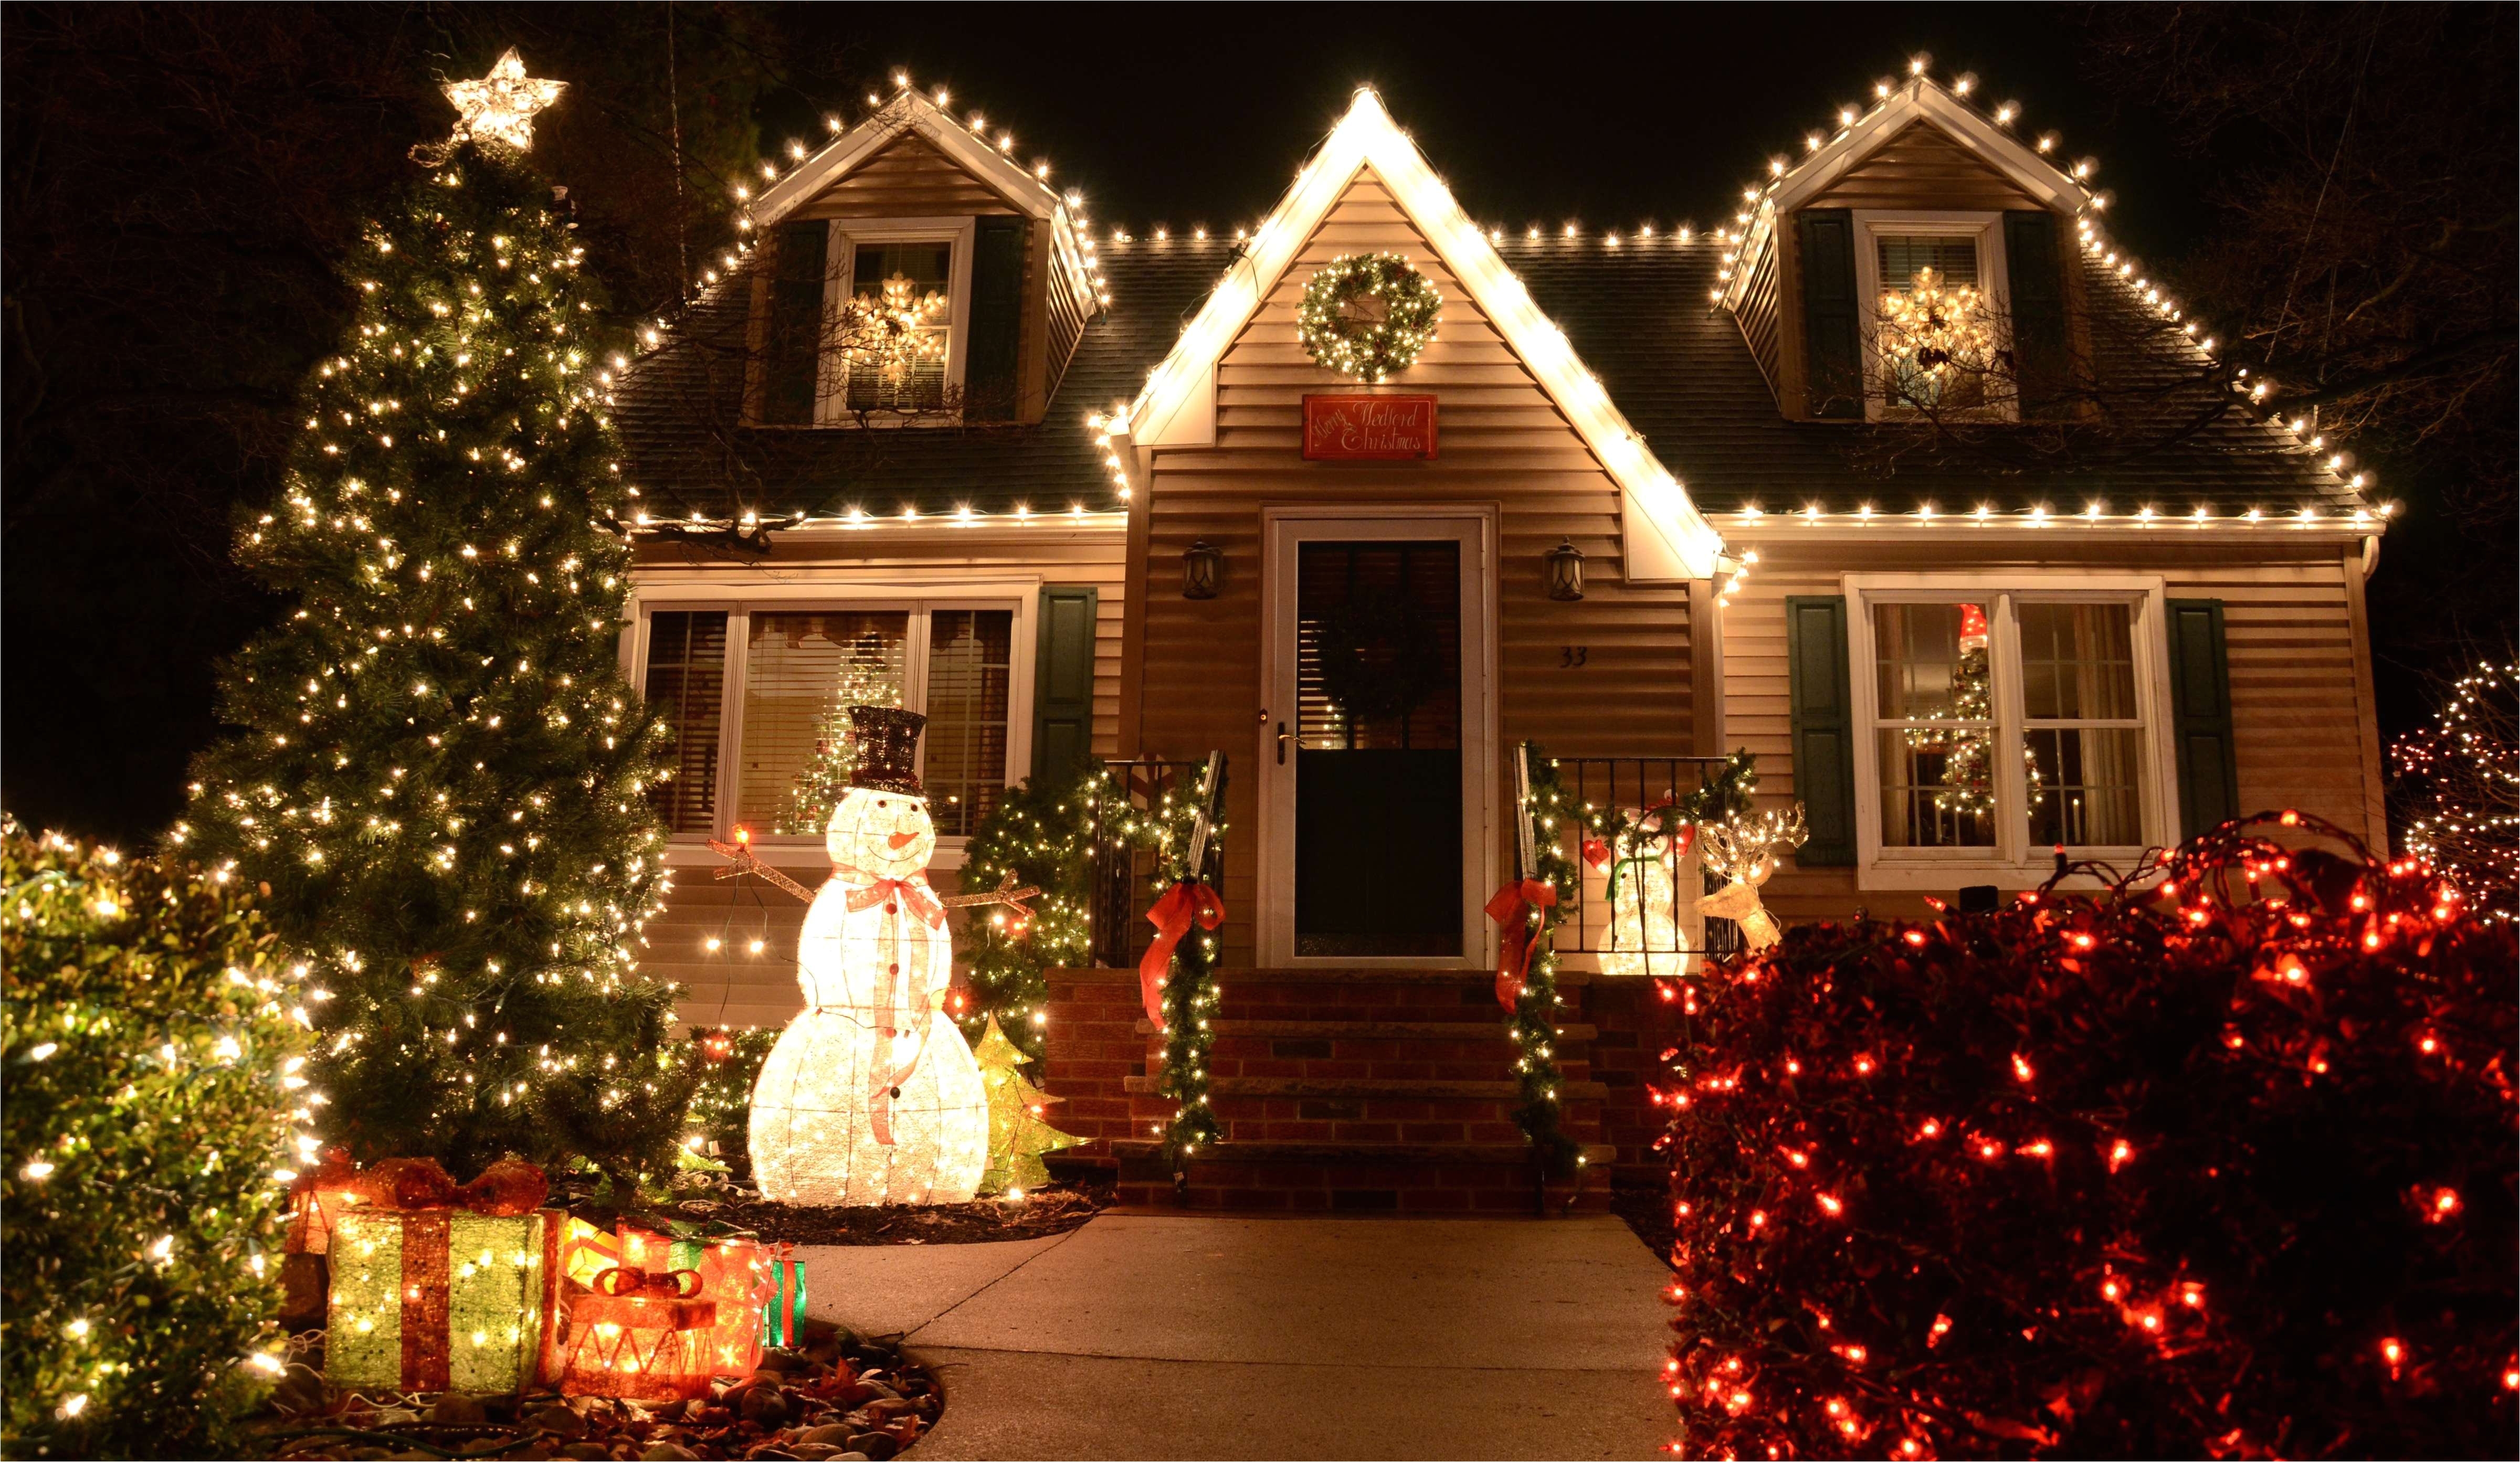 Best Christmas Lights Ever Christmas Light Decorating Ideas Best Of Ideas Christmas Lights and